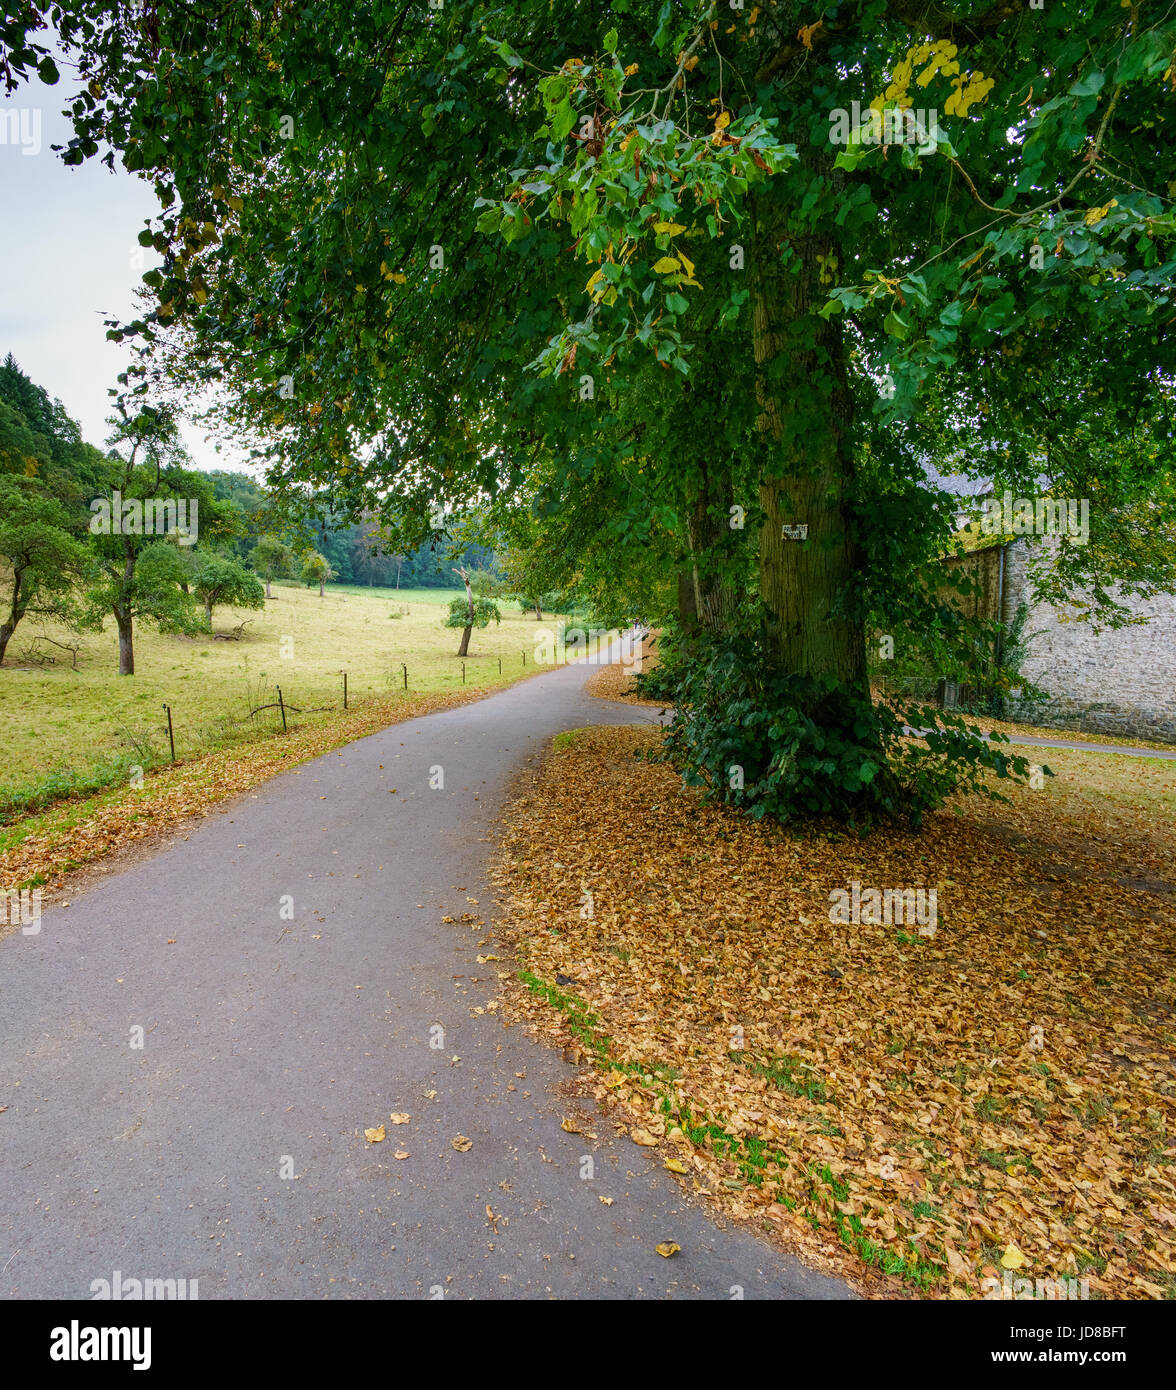 Rural road winding through fields with autumn leaves on ground, Belgium. belgium europe Stock Photo